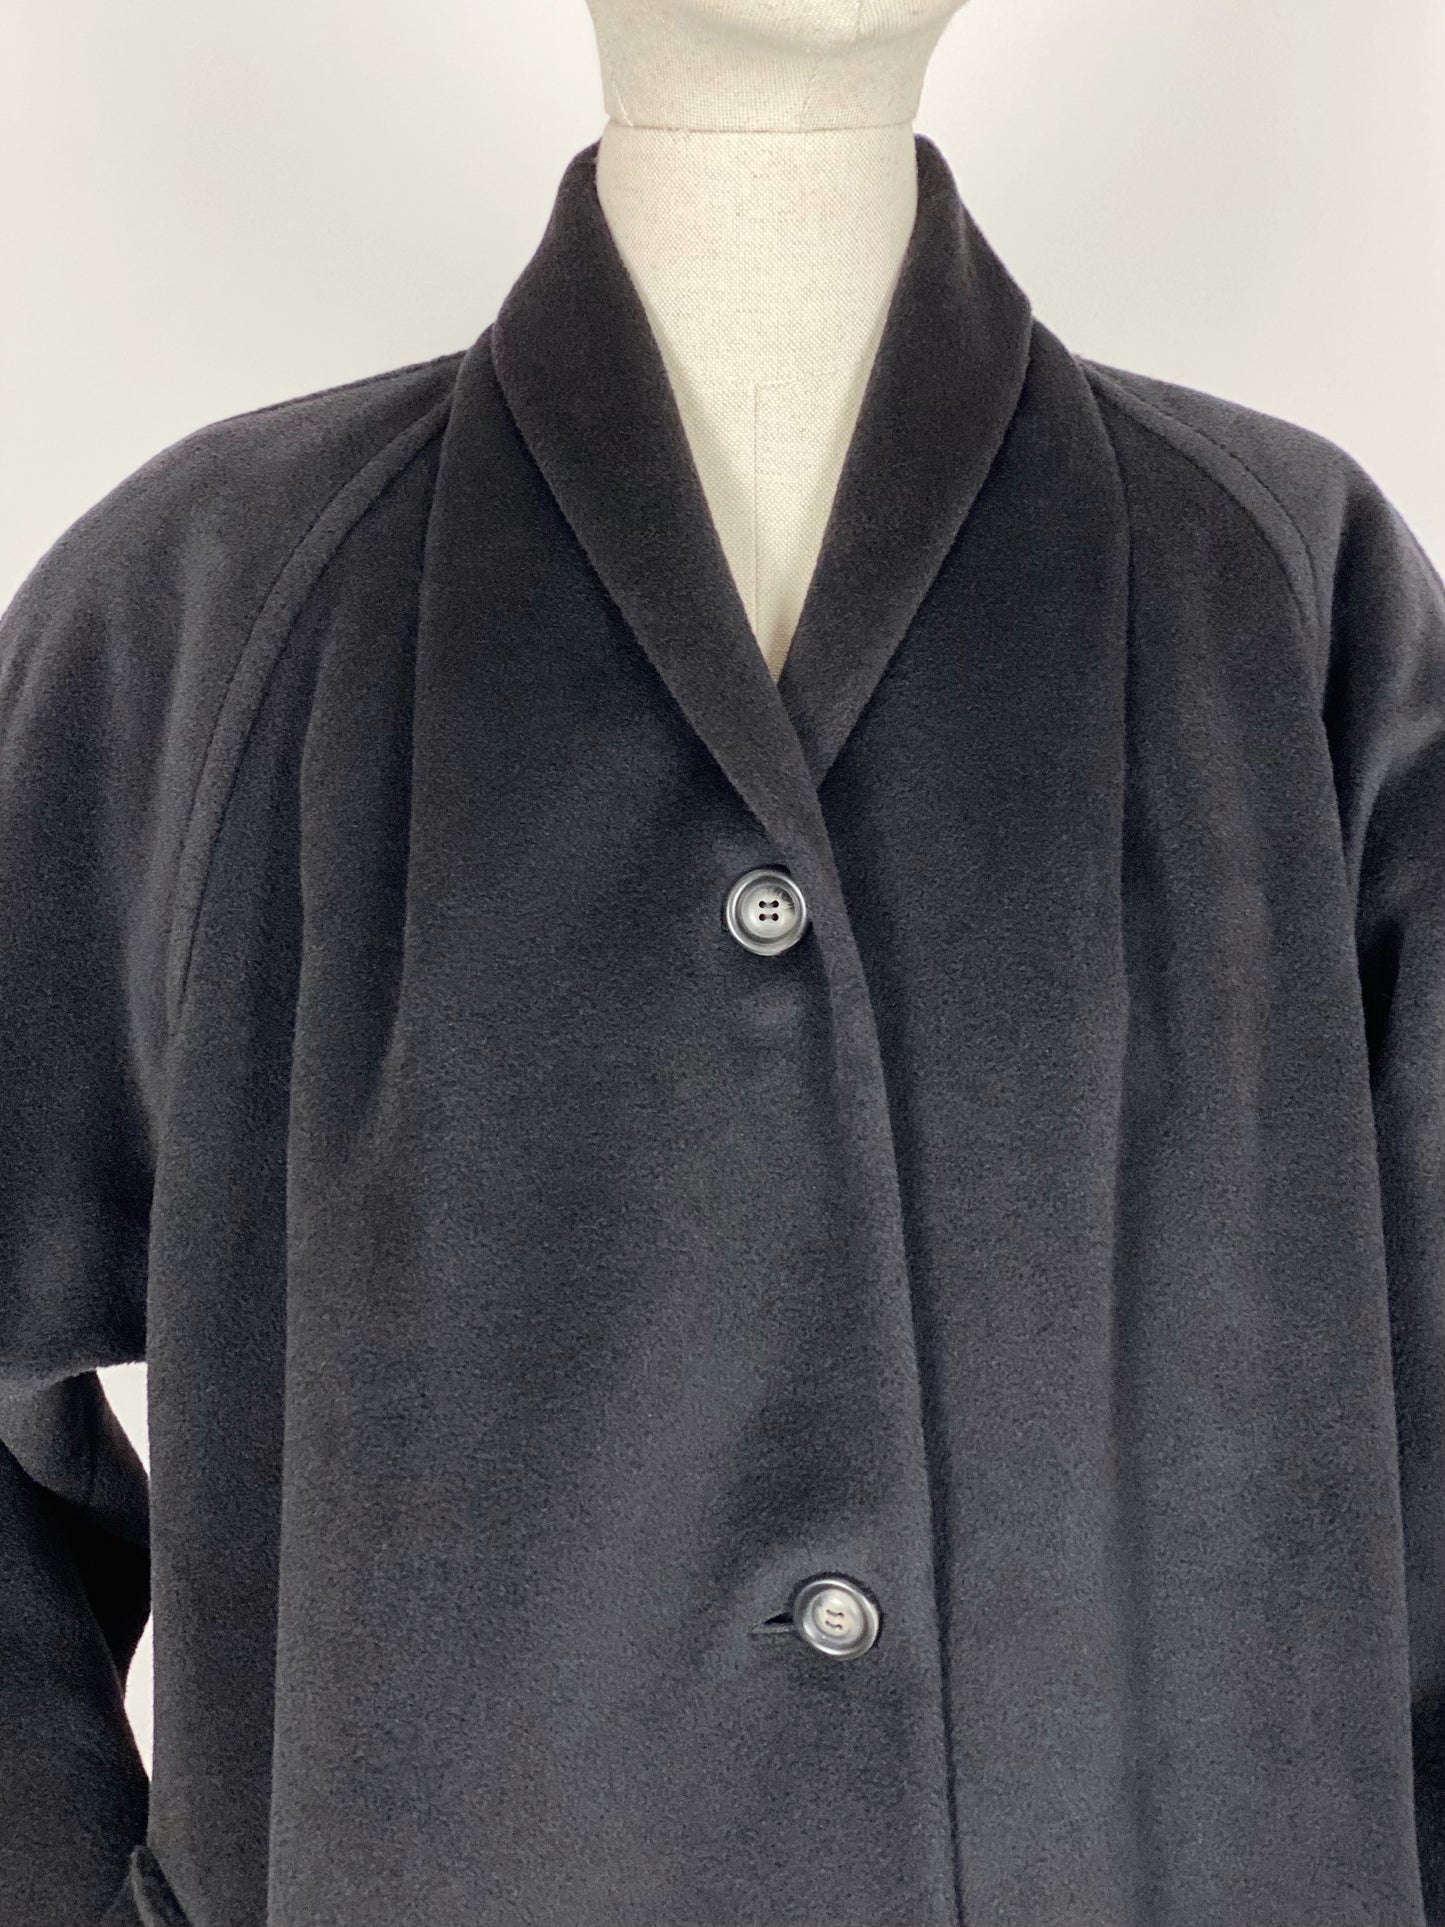 Vintage Black Coat by Max Mara